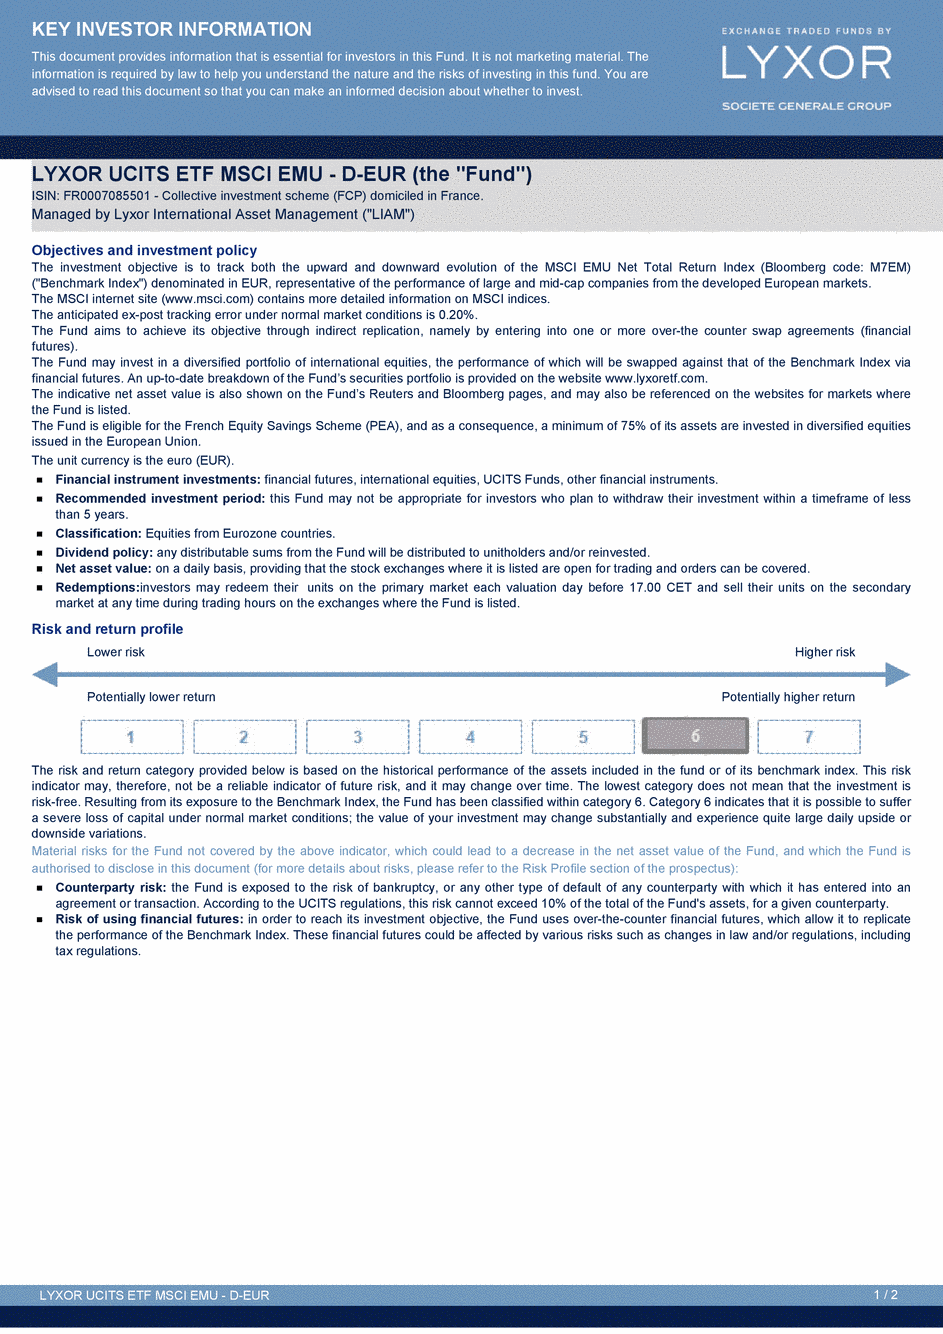 DICI LYXOR MSCI EMU UCITS ETF - 21/07/2015 - Anglais